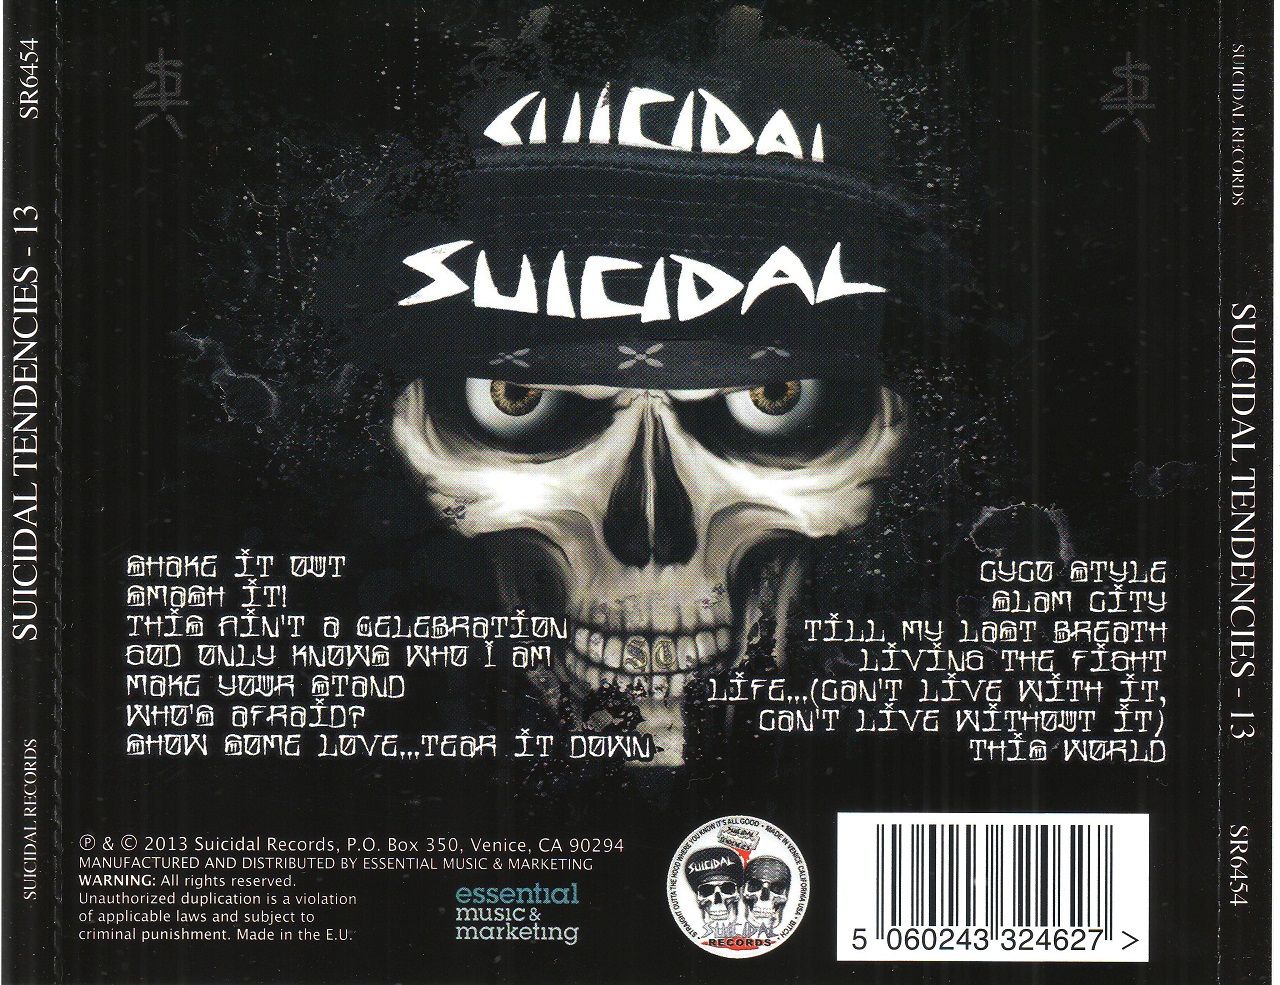 Ecstasy suicidal перевод песни. Suicidal tendencies 1983. Suicidal tendencies 13. Группа Suicidal tendencies. Suicidal tendencies 1983 list.